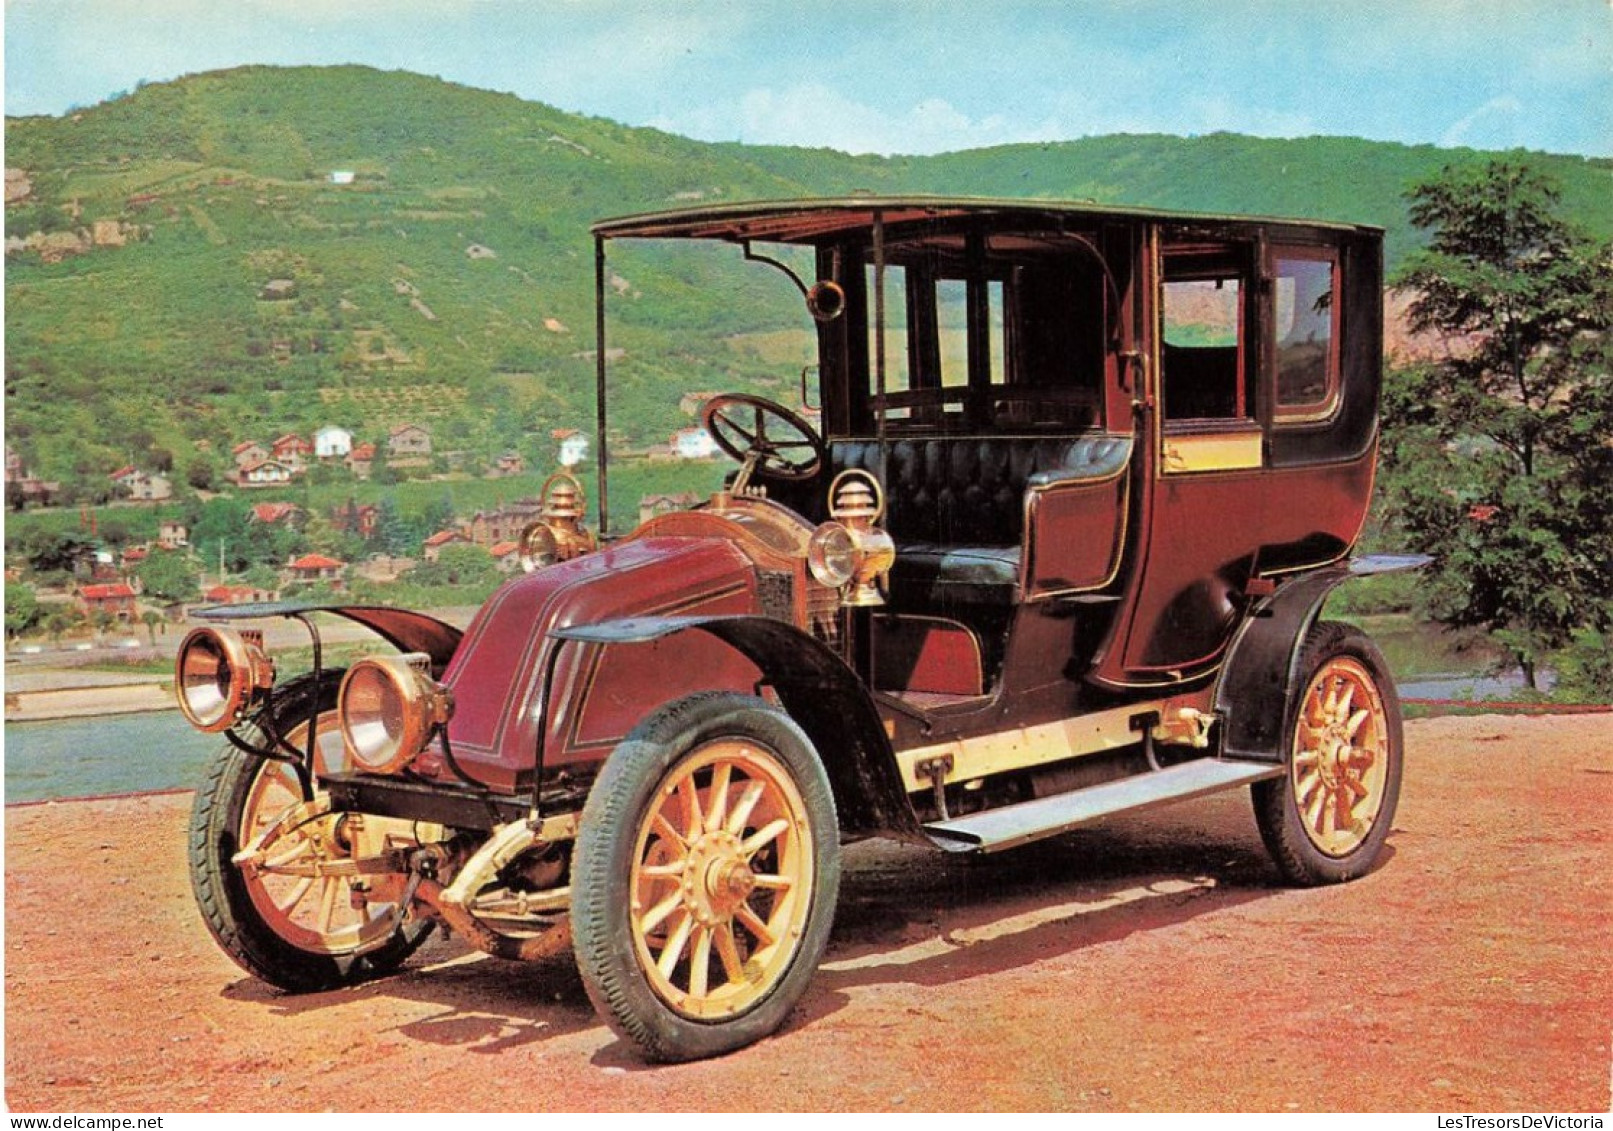 TRANSPORT - Musée De L'automobile - Renault 1908 - Taxi De La Marne - Carte Postale - Taxis & Droschken